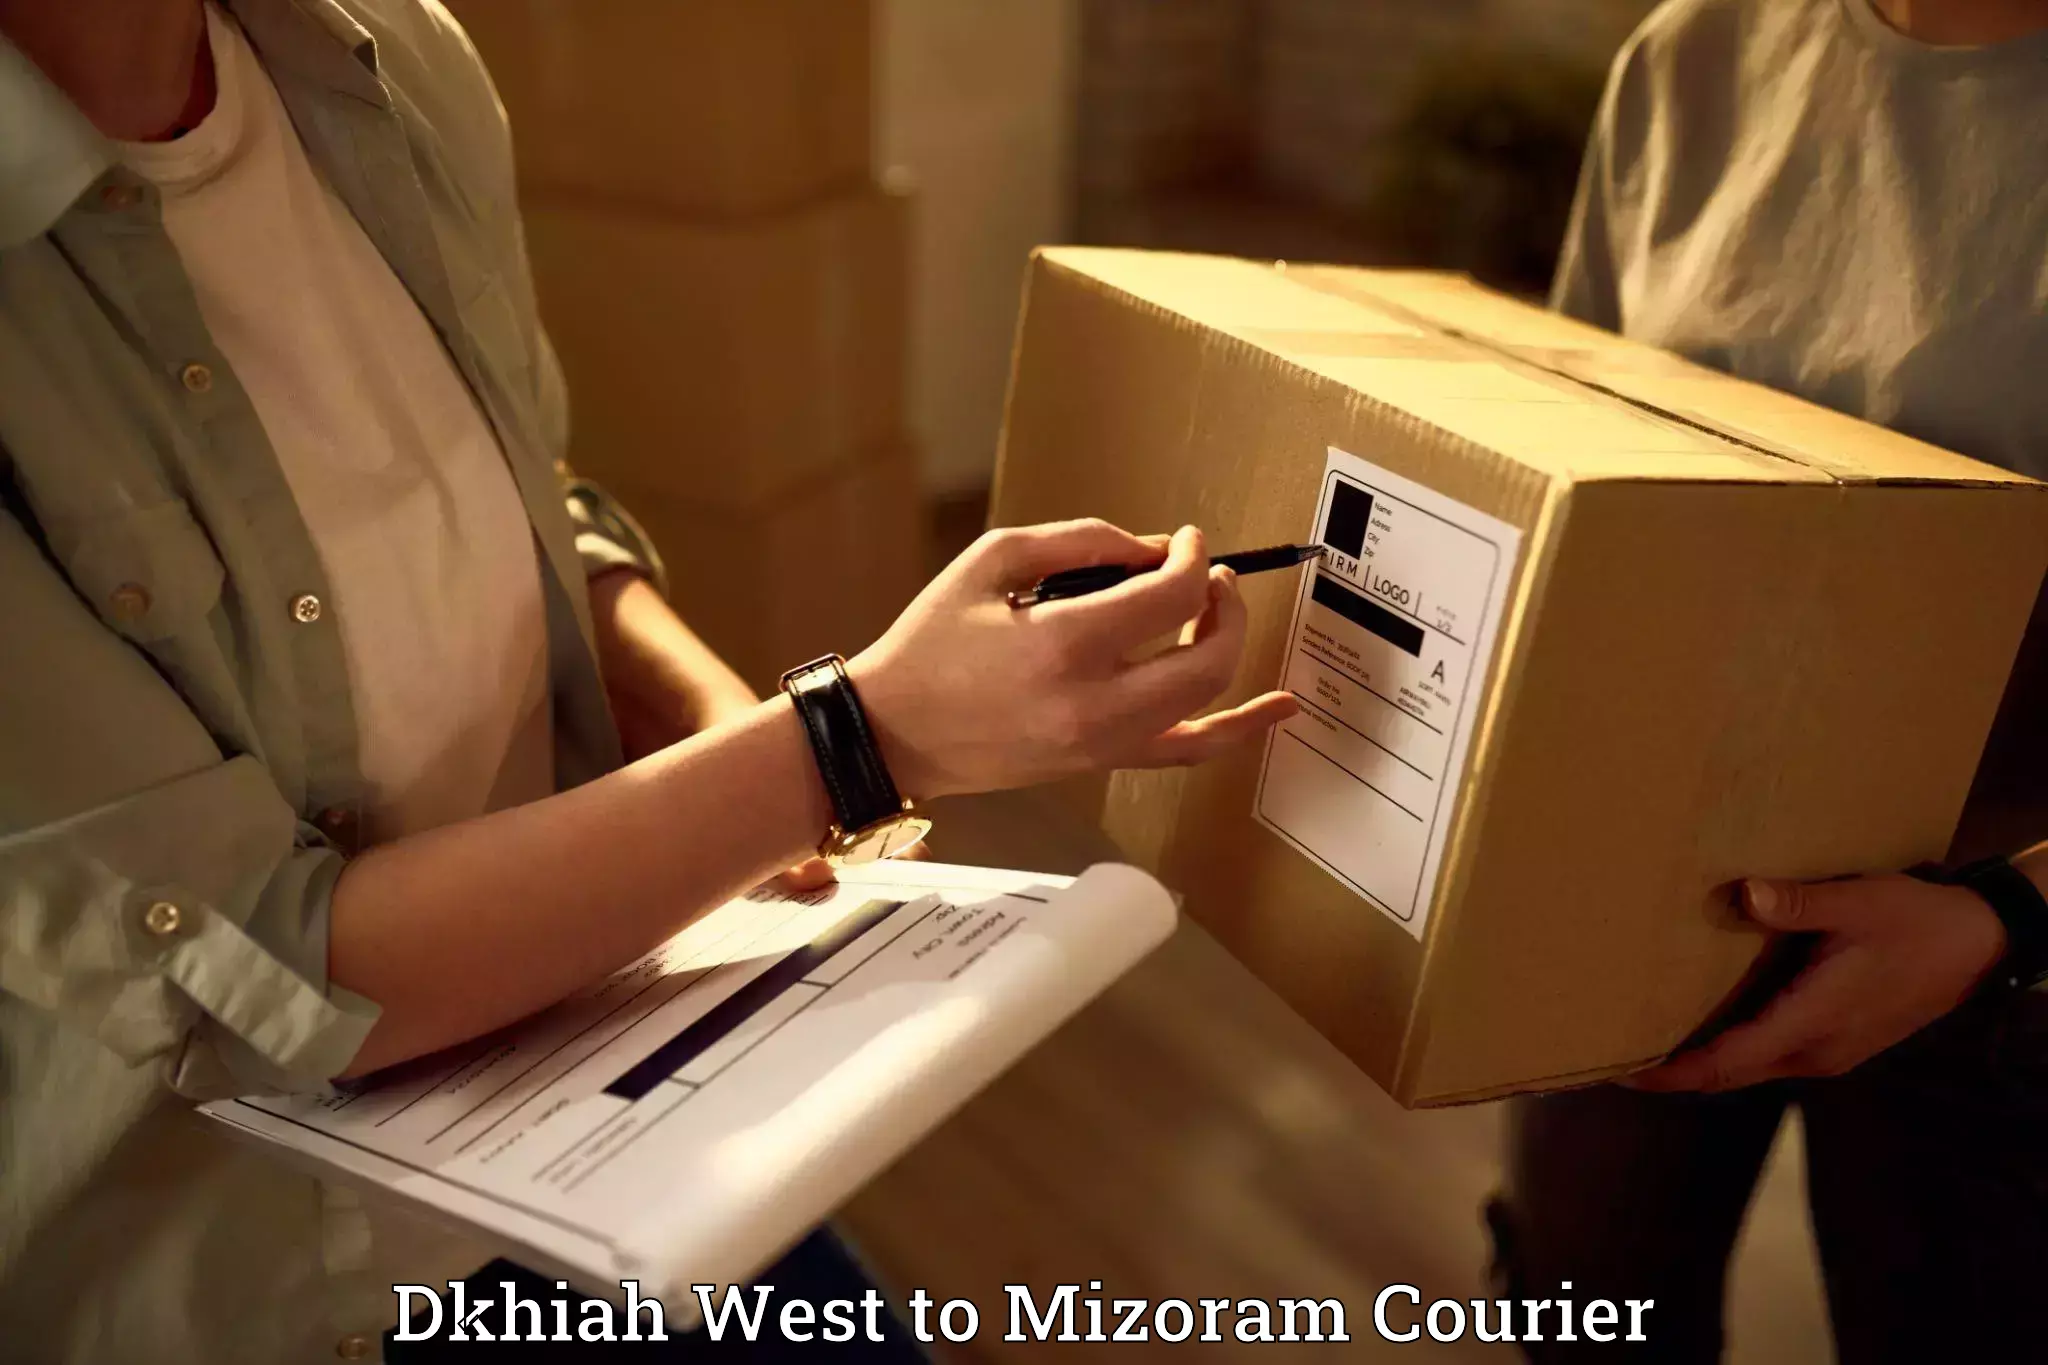 Moving service excellence Dkhiah West to Mizoram